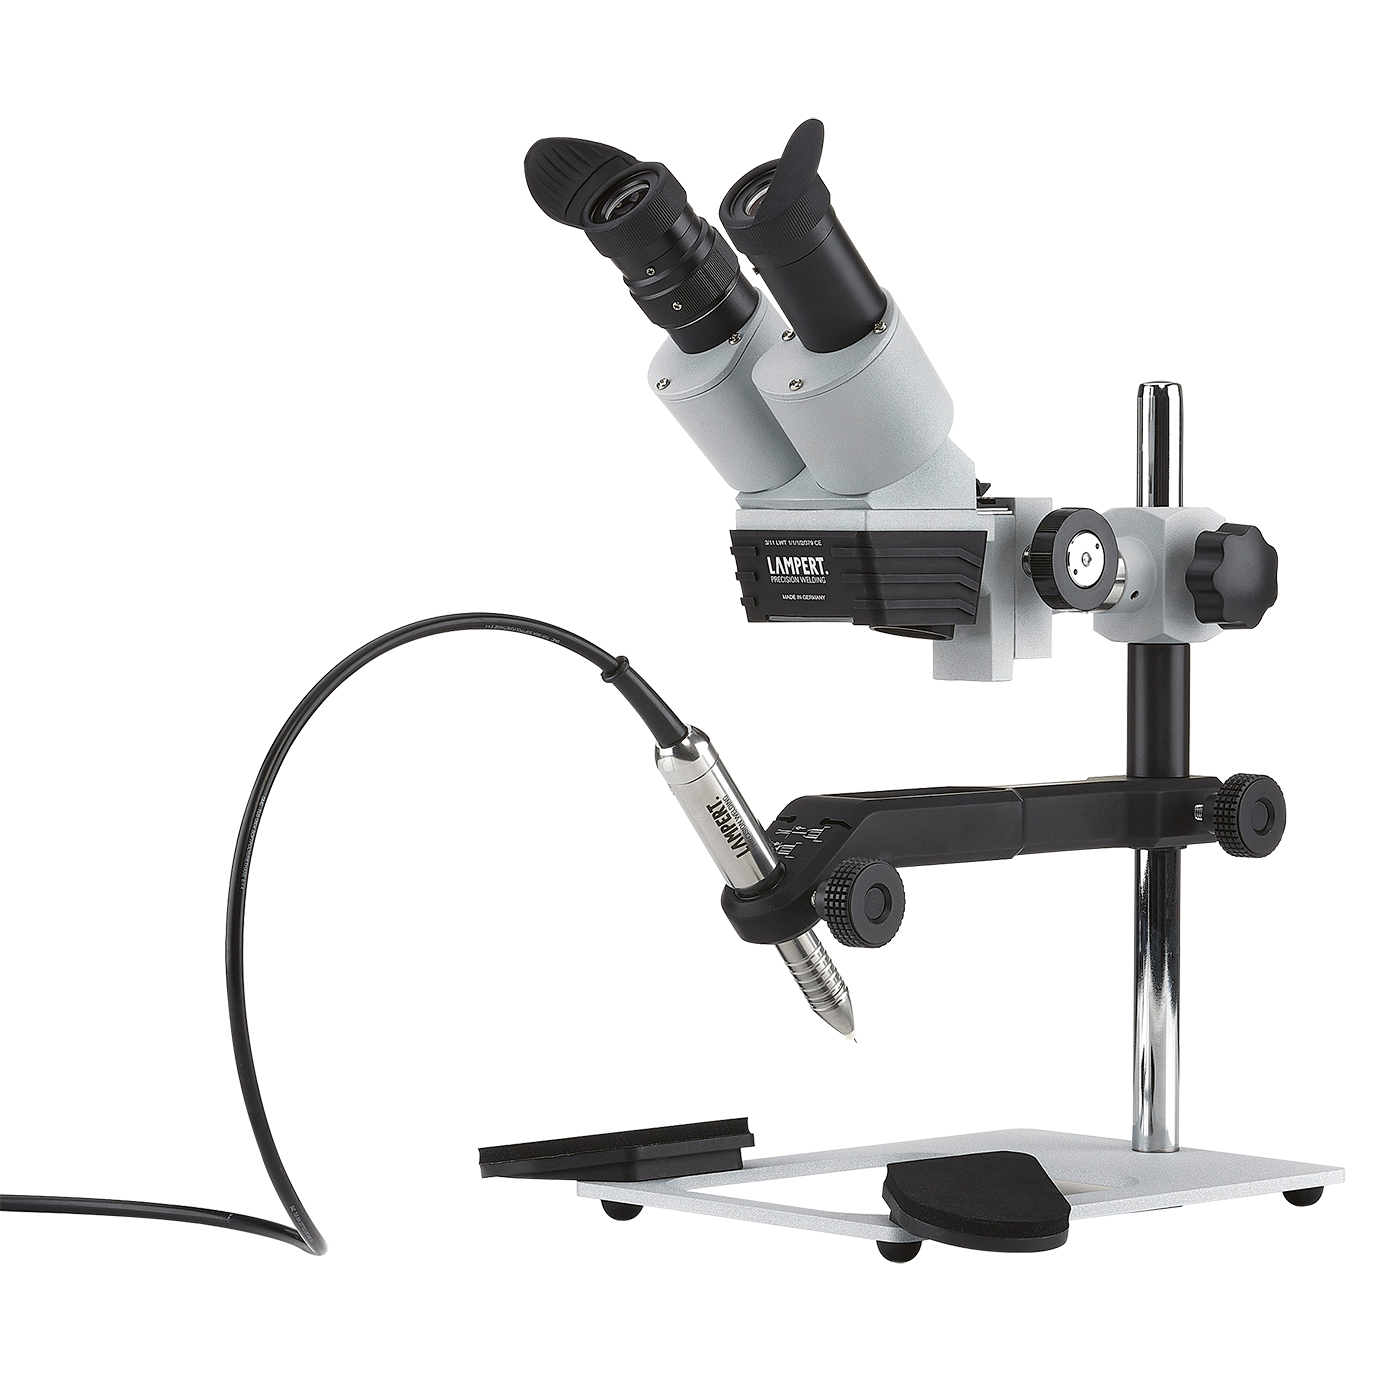 Lampert Puk 6 Feinschweißgerät, mit SM 6 Schweißmikroskop - 1 Stück